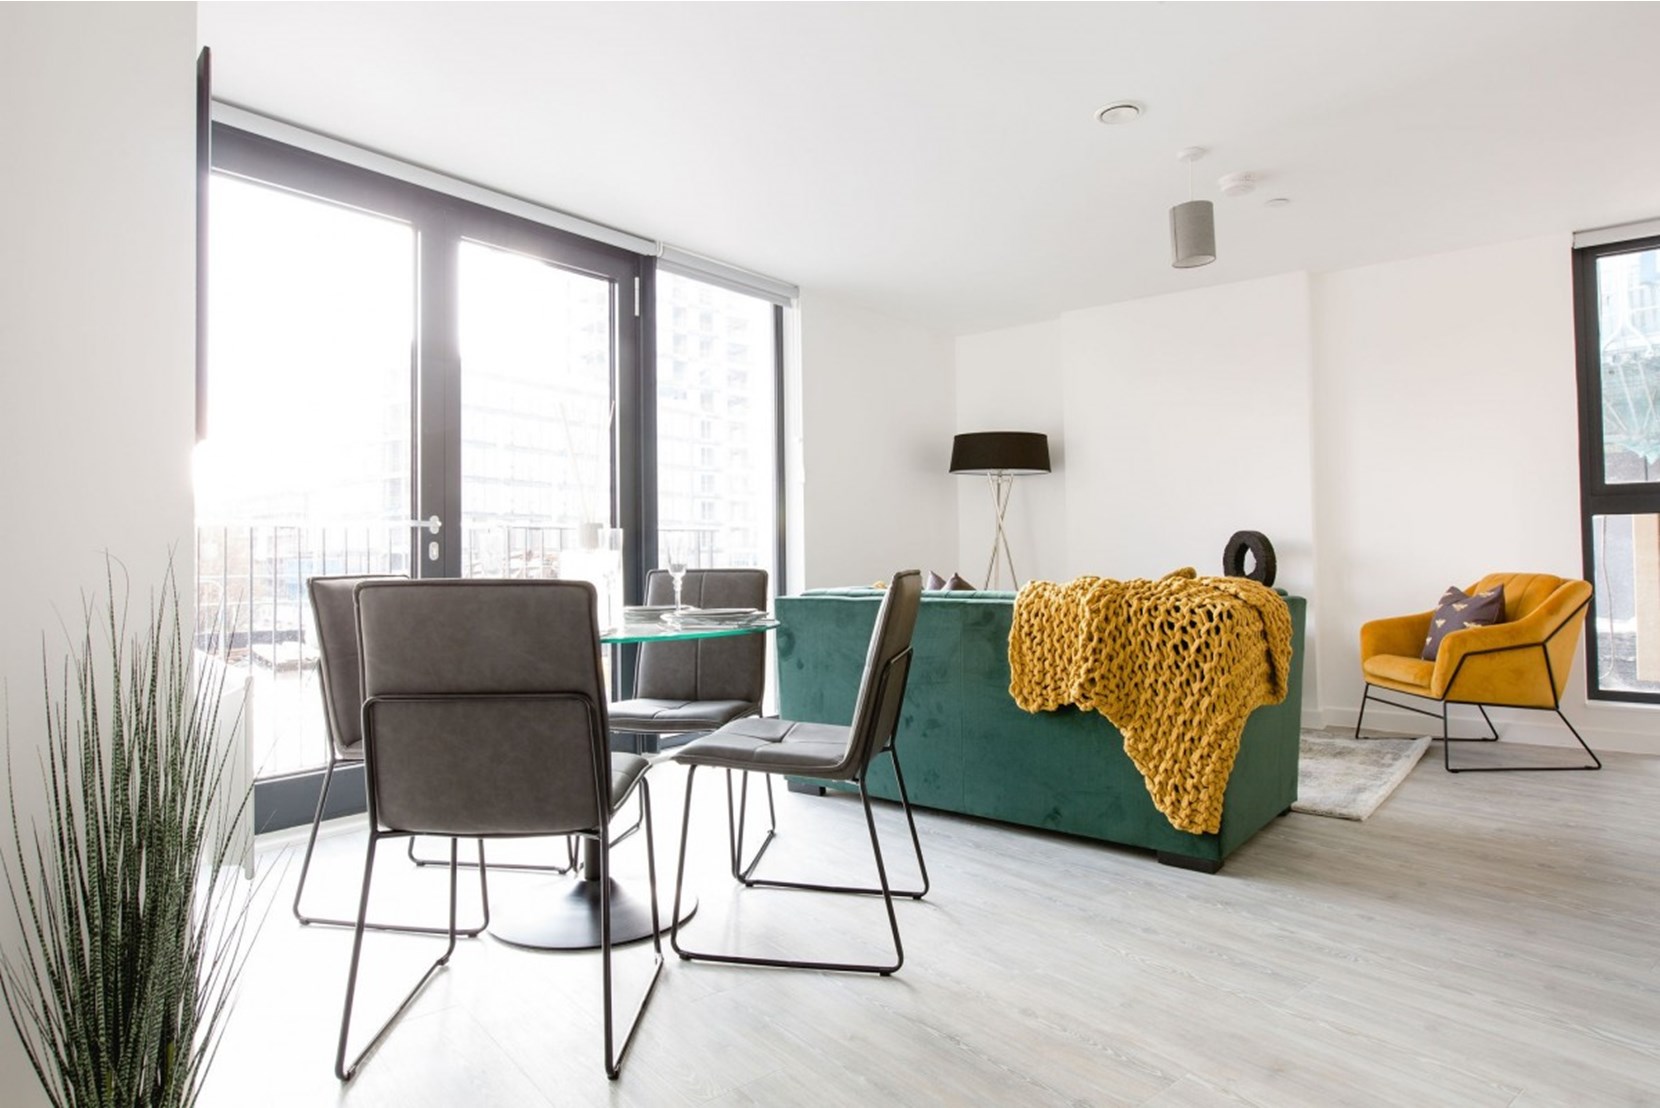 Apartment-Allsop-Vox-Manchester-interior-living-dining-room